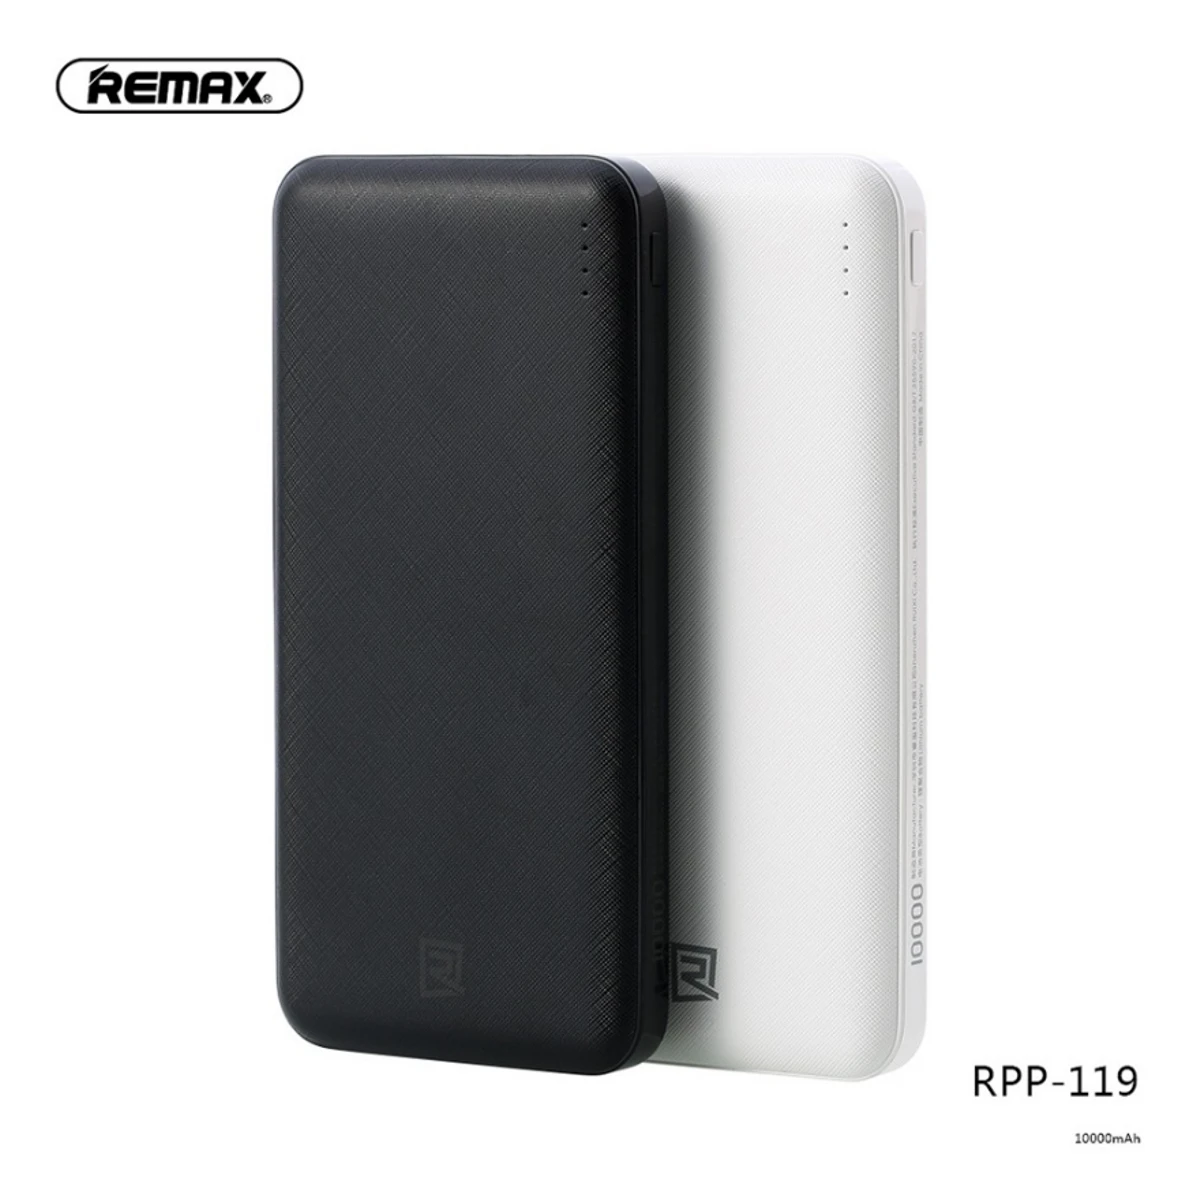 REMAX RPP-119 JANE SERIES 10,000MAH POWER BANK